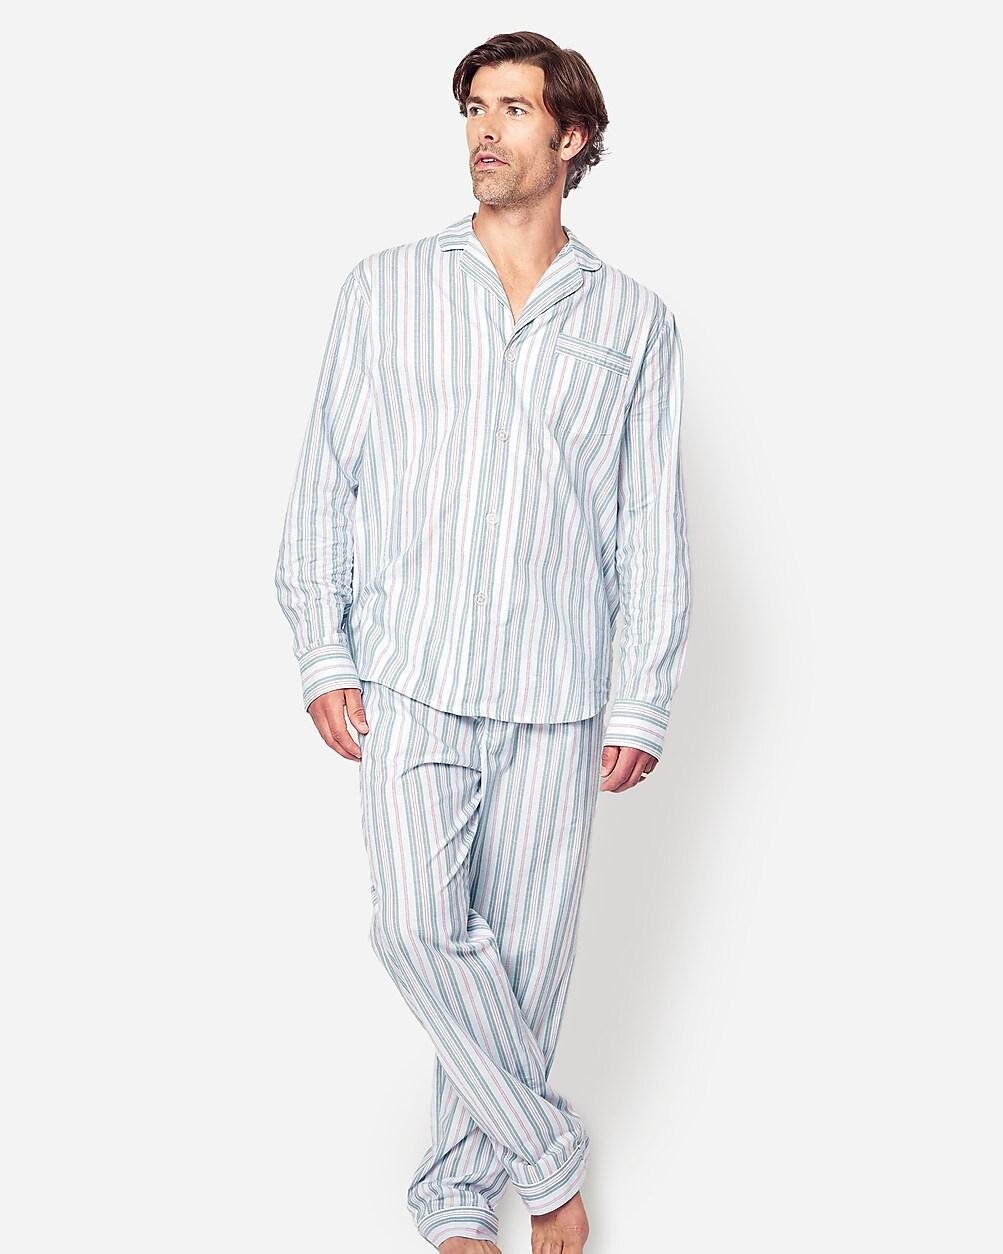 Petite Plume™ men's pajama set in vintage french stripe by J.CREW